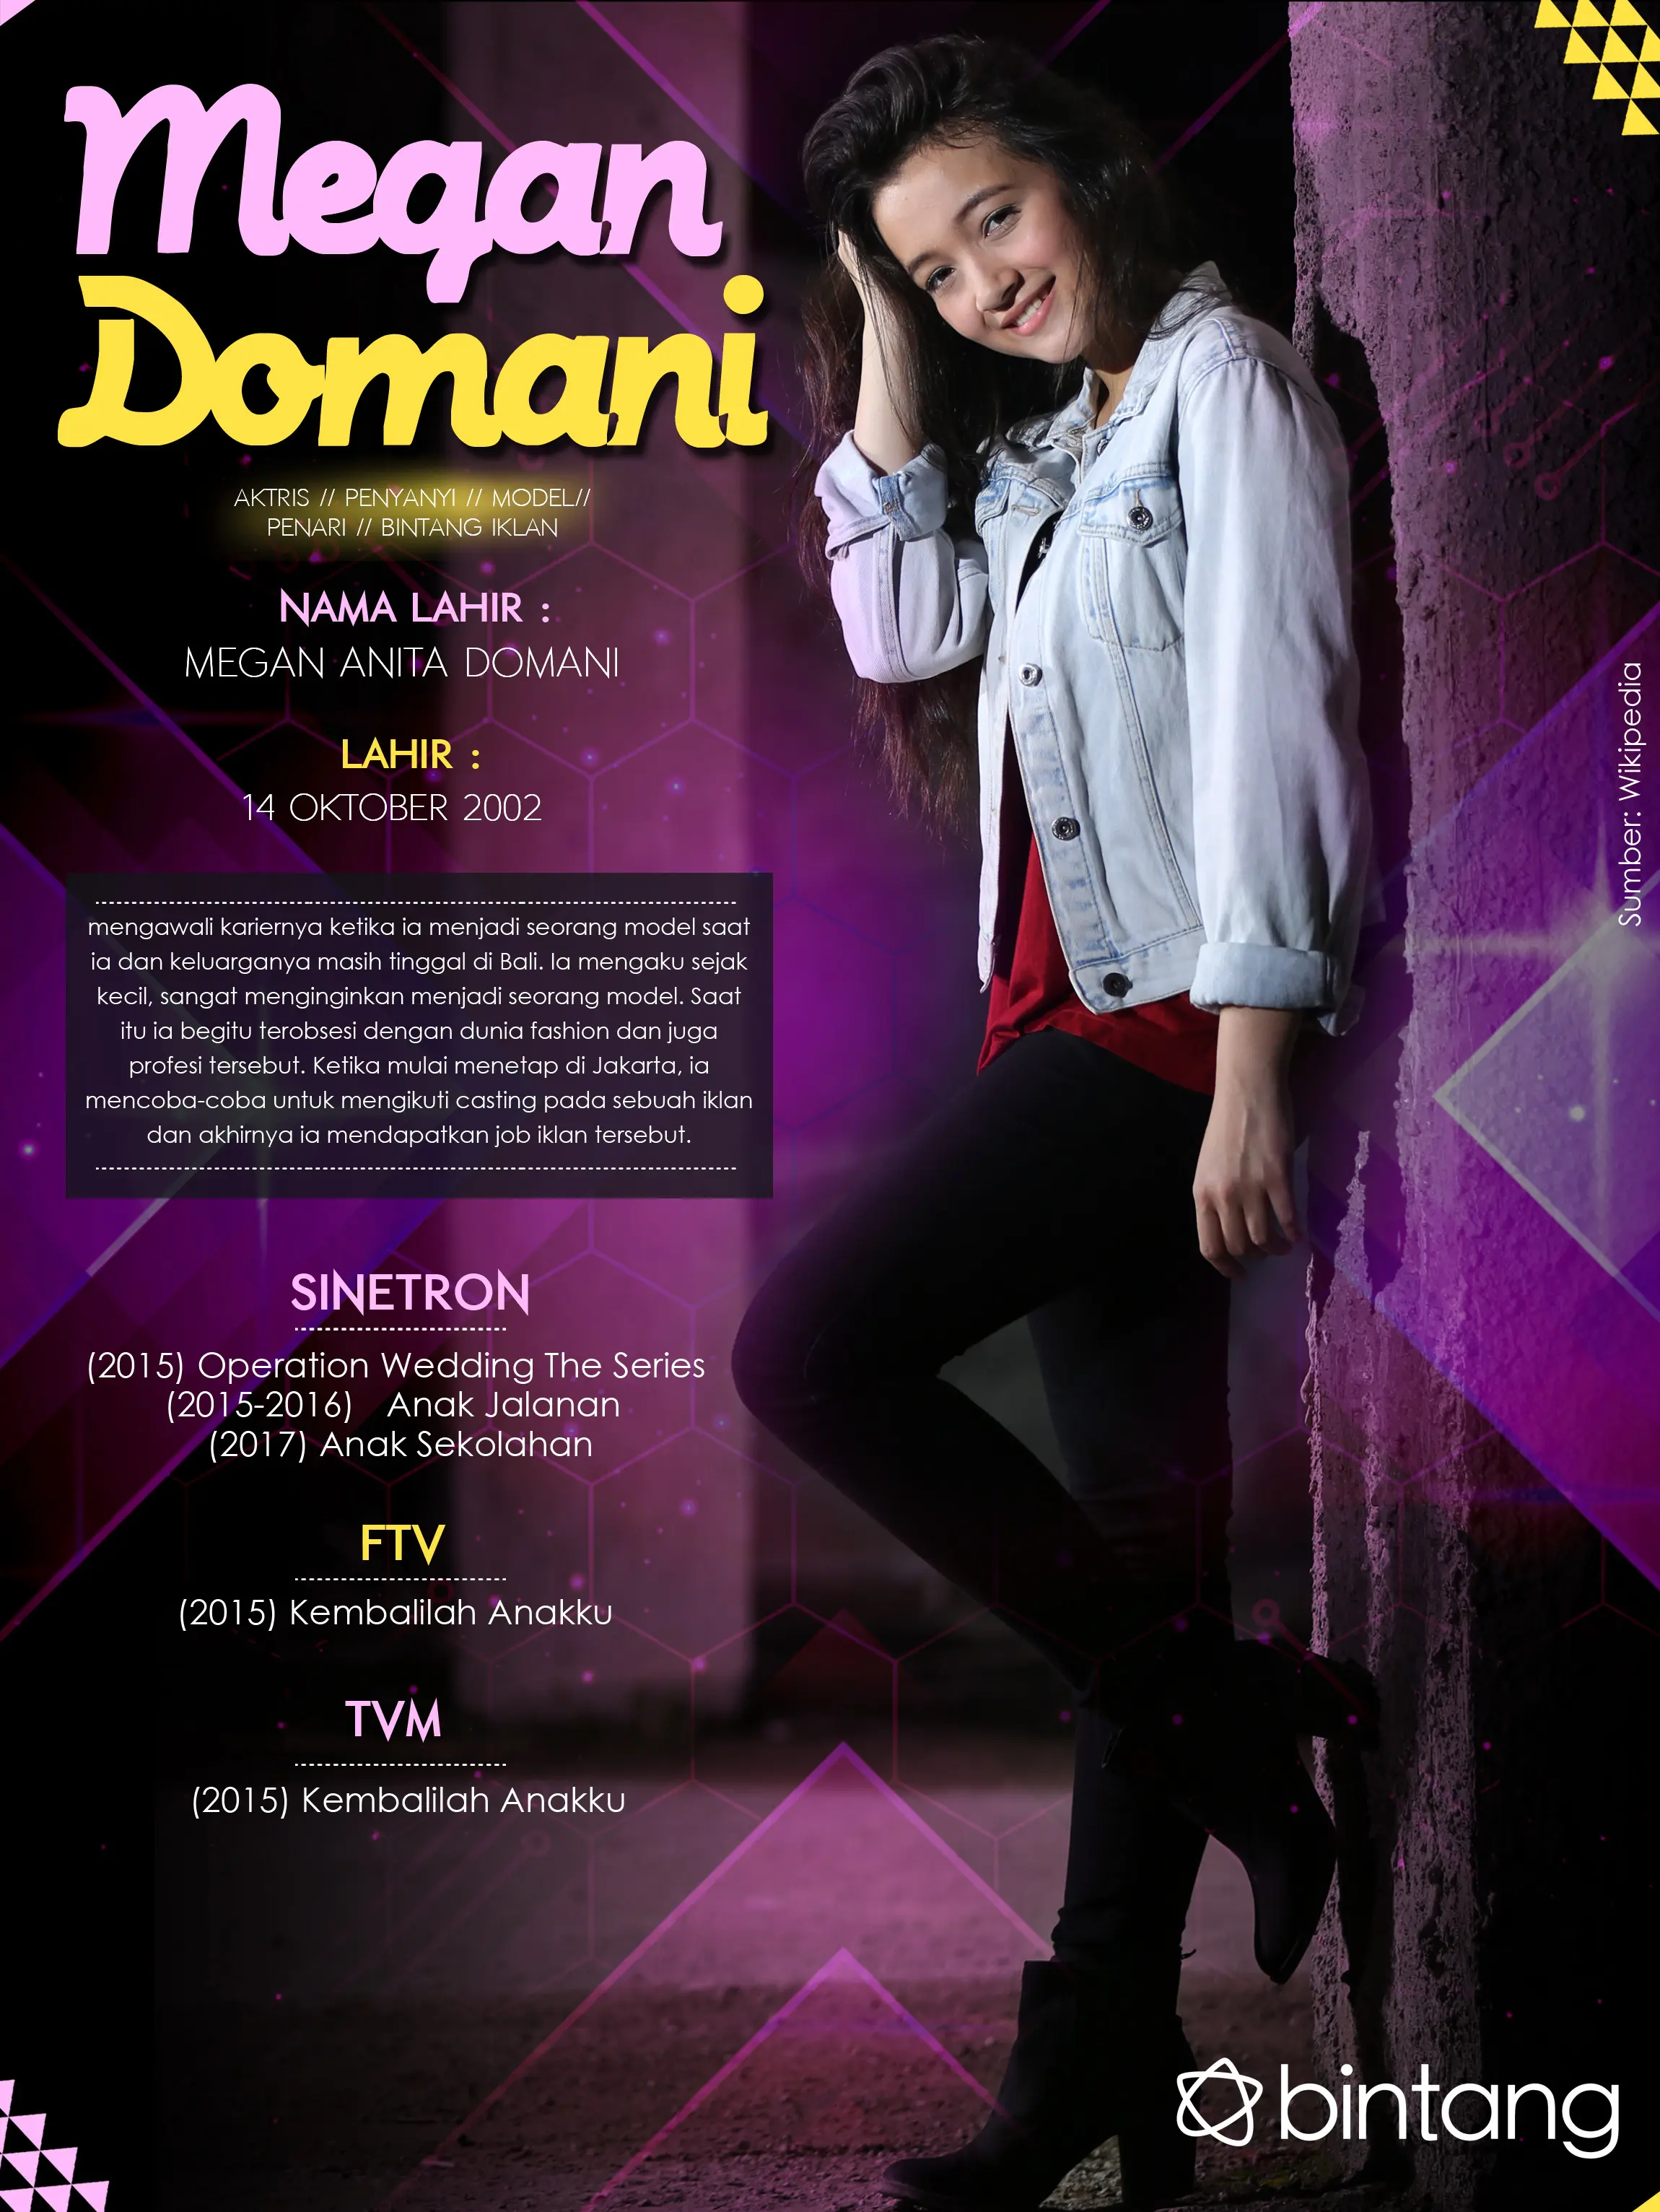 Celeb Bio Megan Domani (Fotografer: Nurwahyunan, Desain: Nurman Abdul Hakim/Bintang.com)